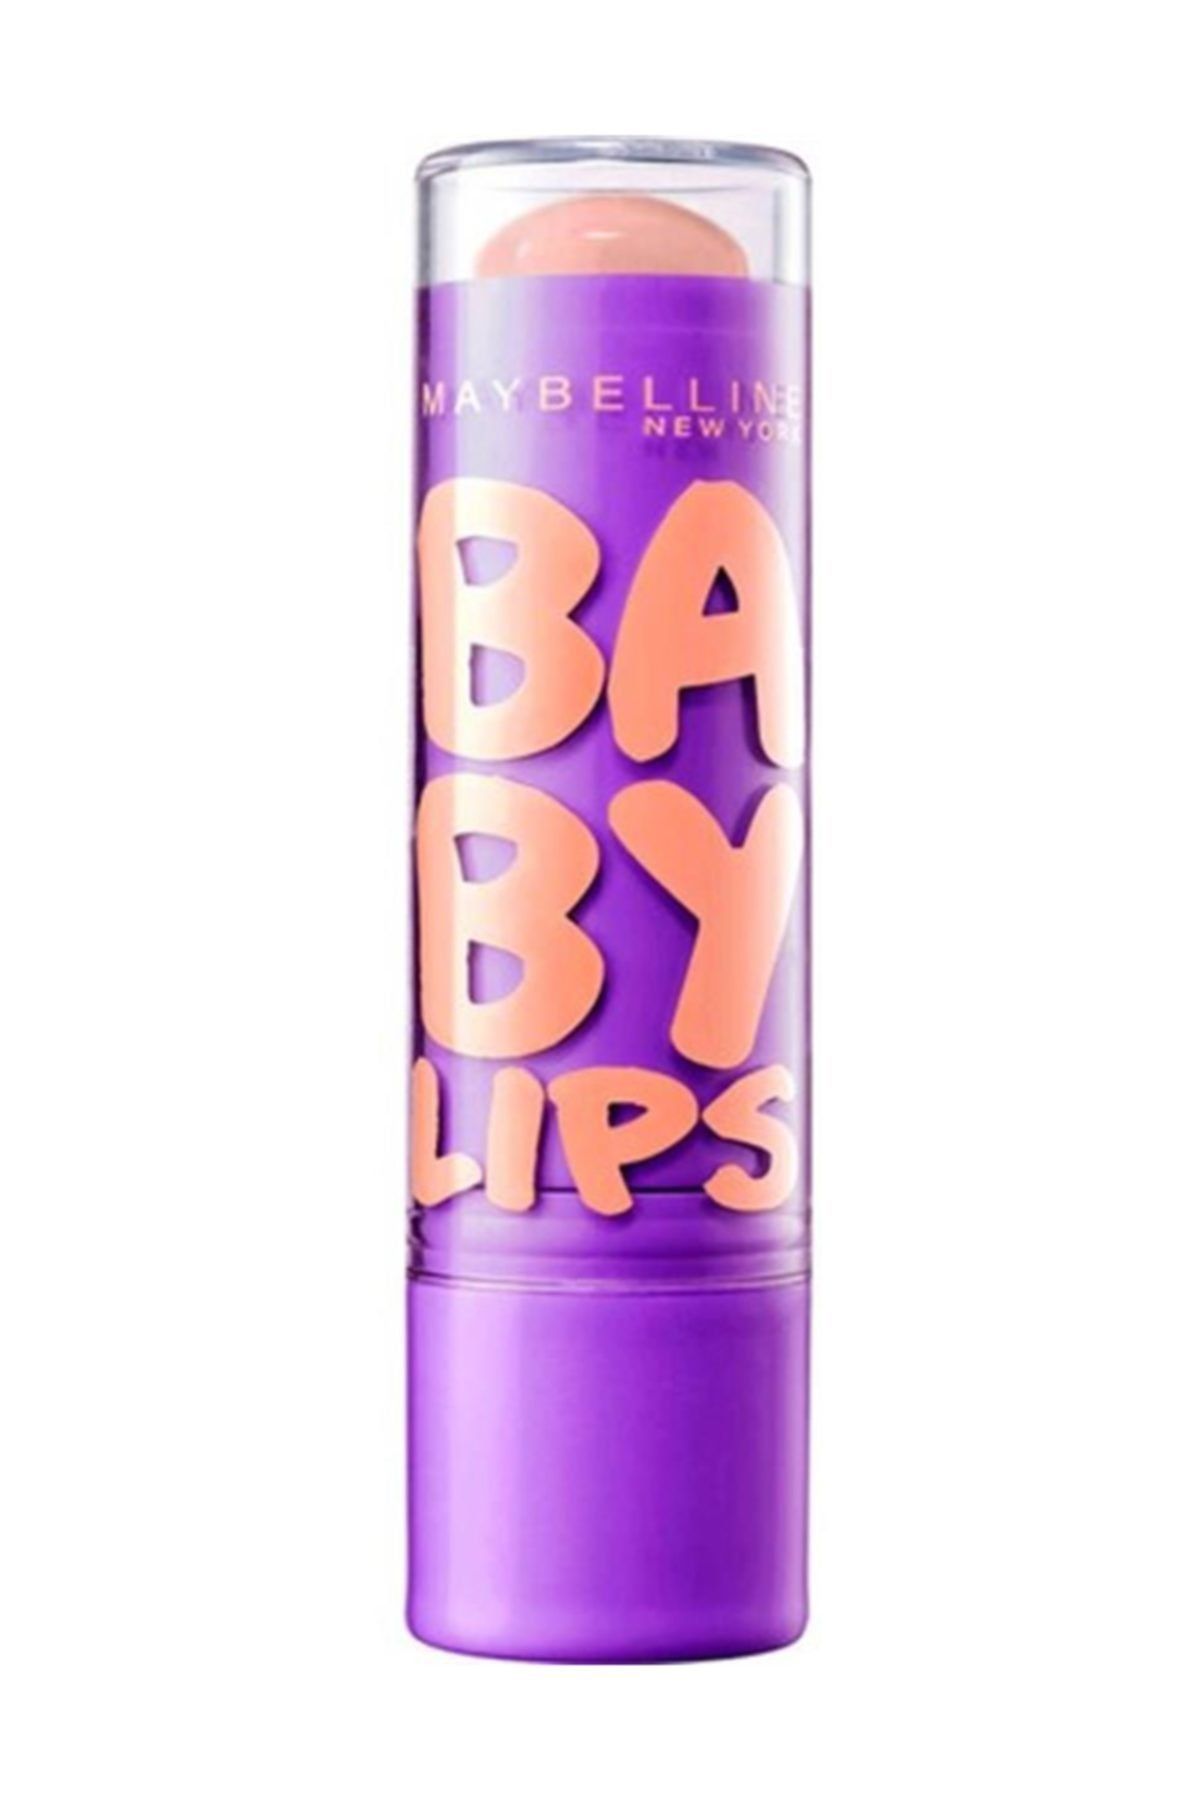 Maybelline New York "maybellıne – Baby Lips